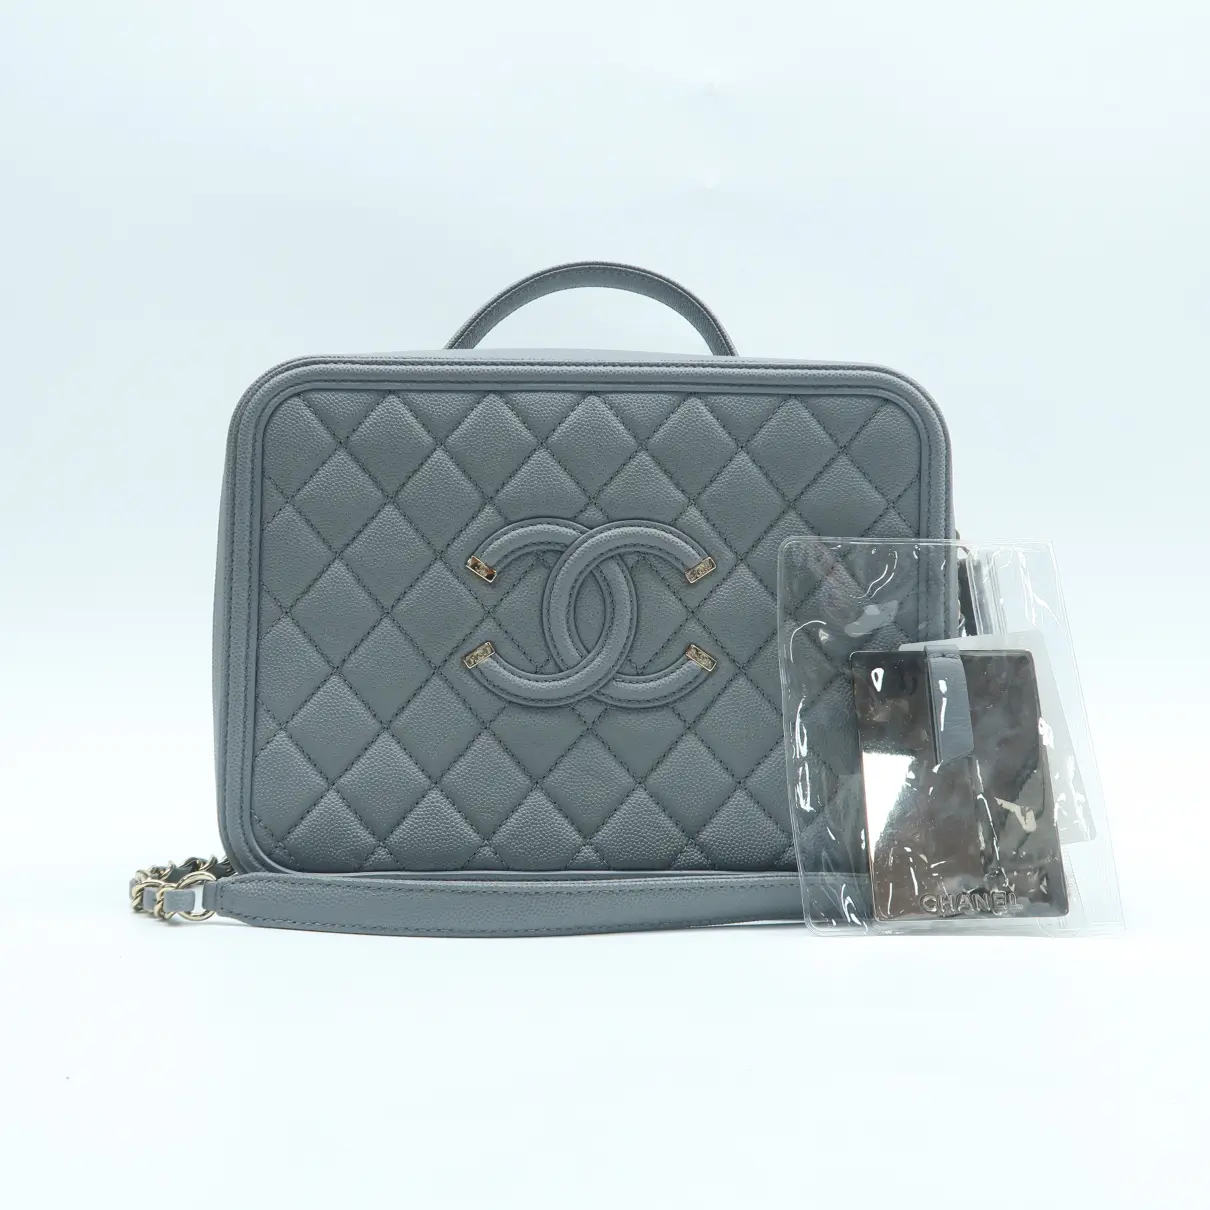 Buy Chanel Vanity leather satchel online